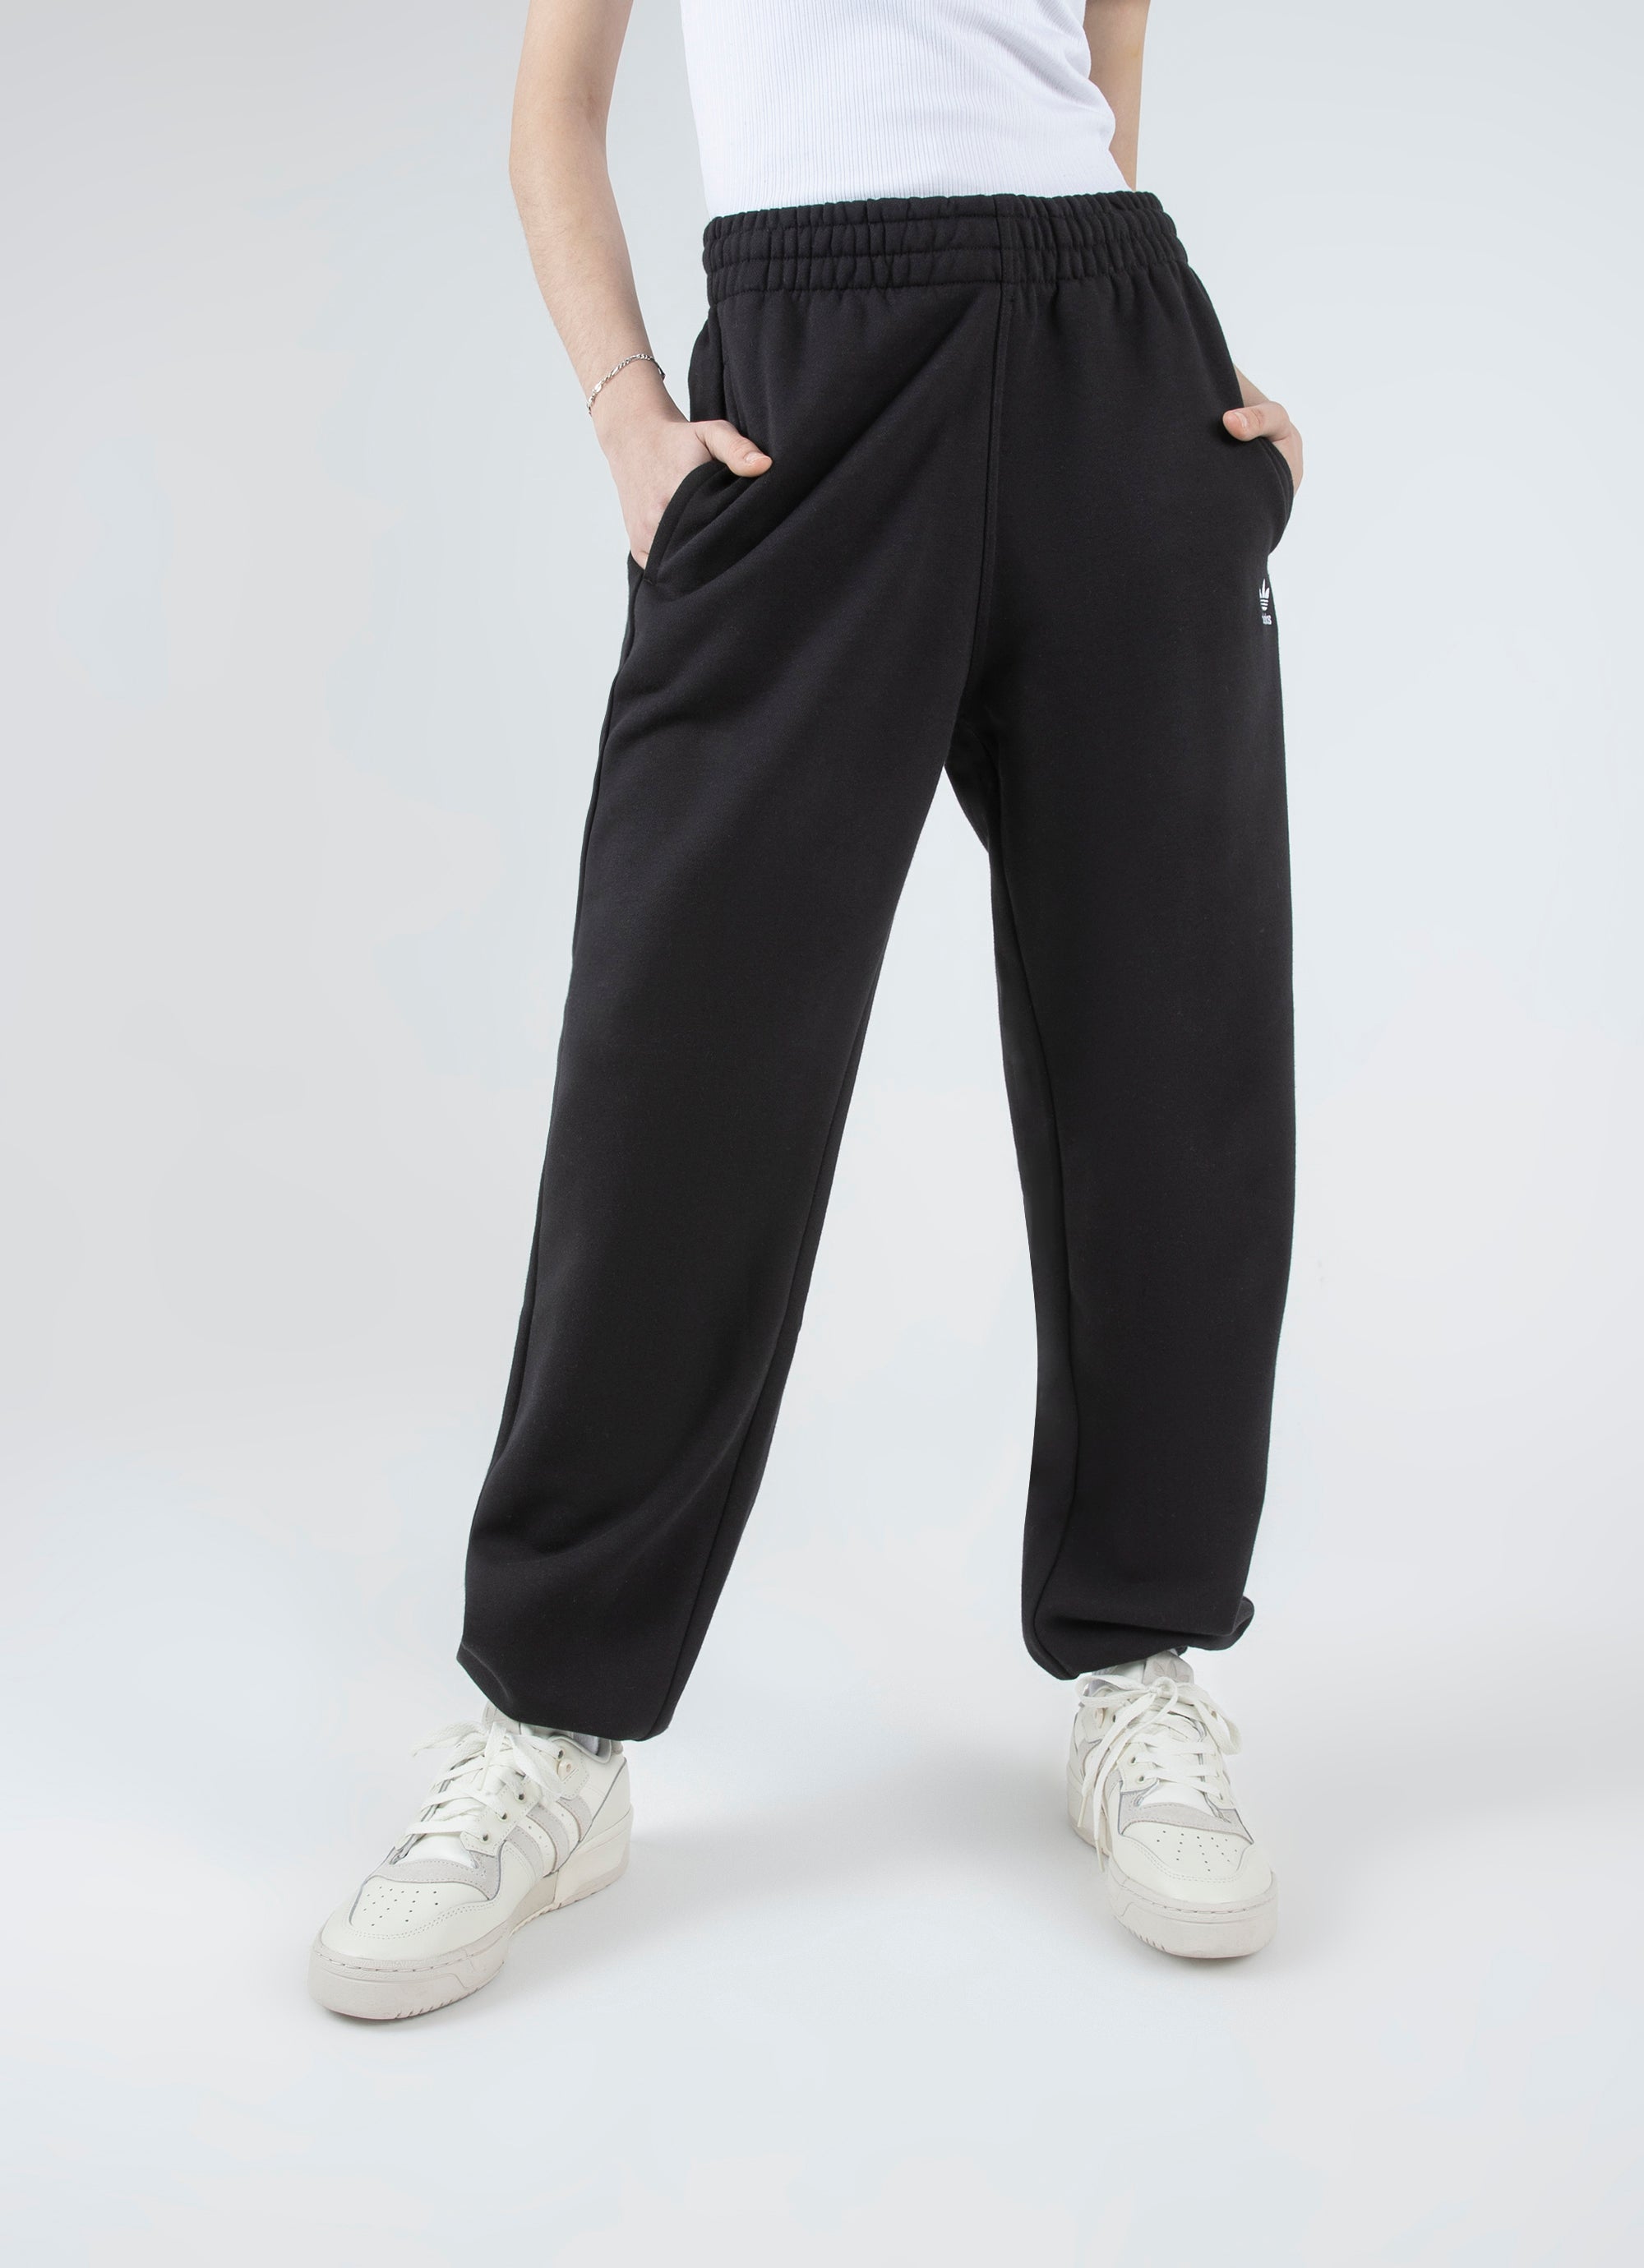 https://www.redrat.co.nz/content/products/adidas-originals-essentials-fleece-joggers-womens-black-side-detail-54392.jpg